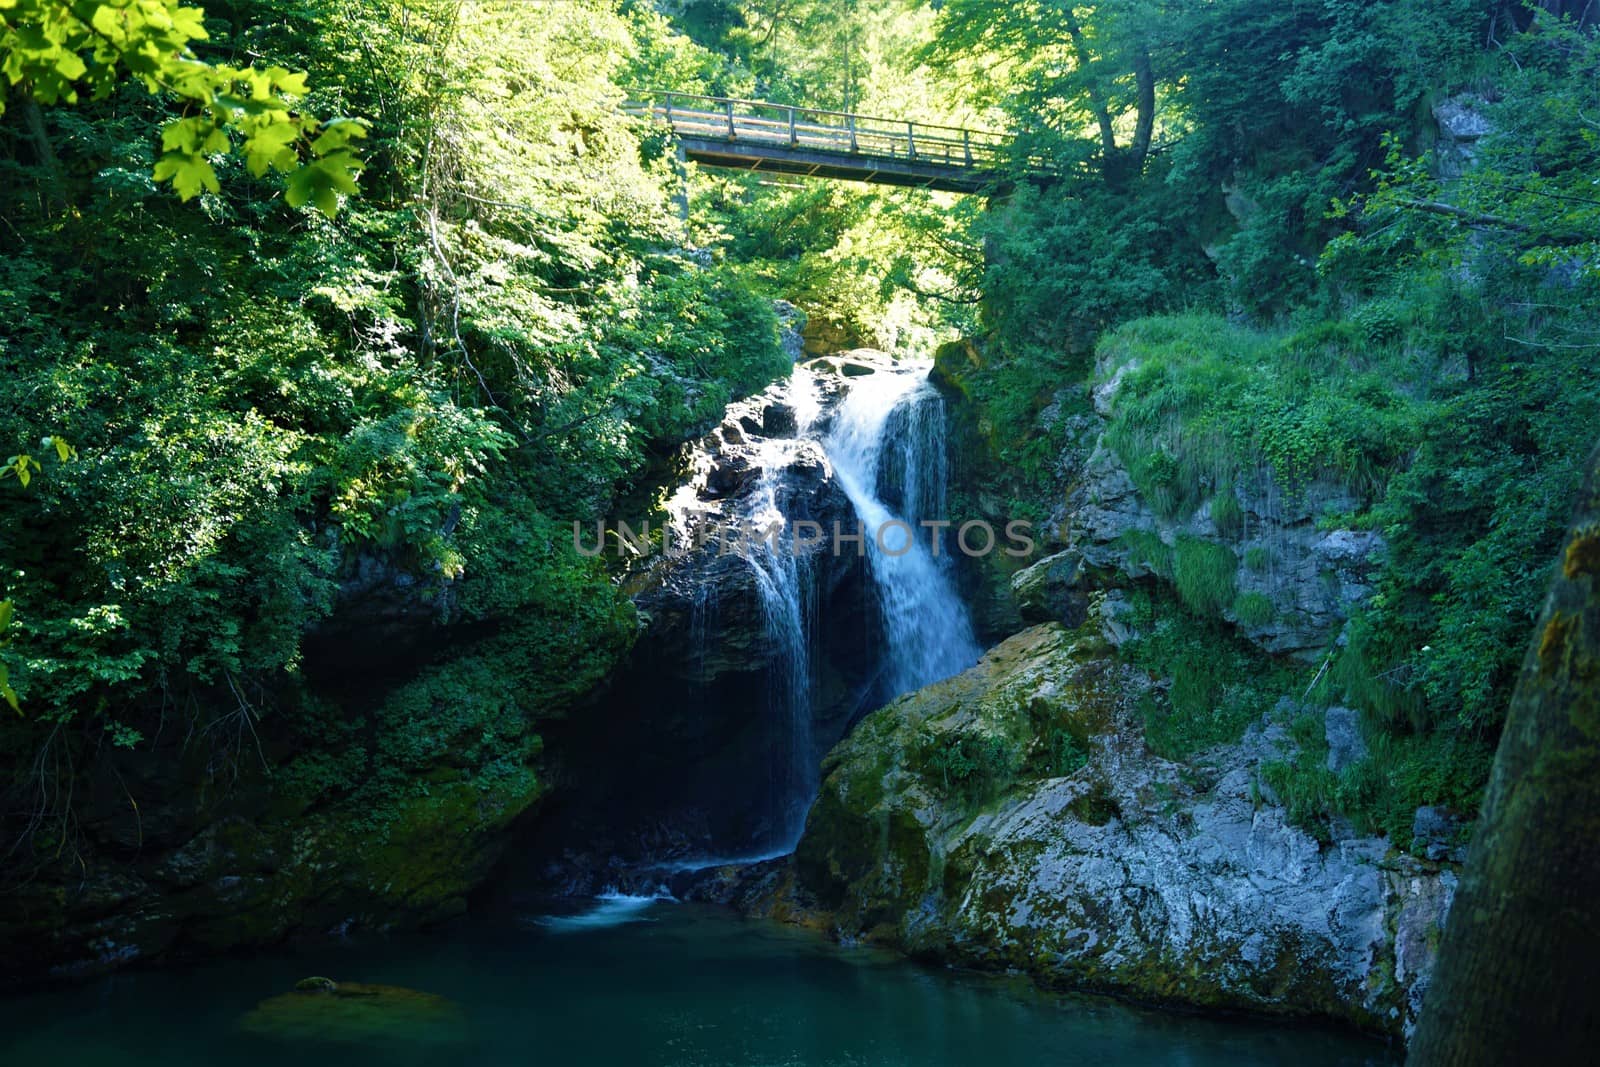 Sum waterfall at the end of Vintgar Gorge in Blejska Dobrava, Slovenia